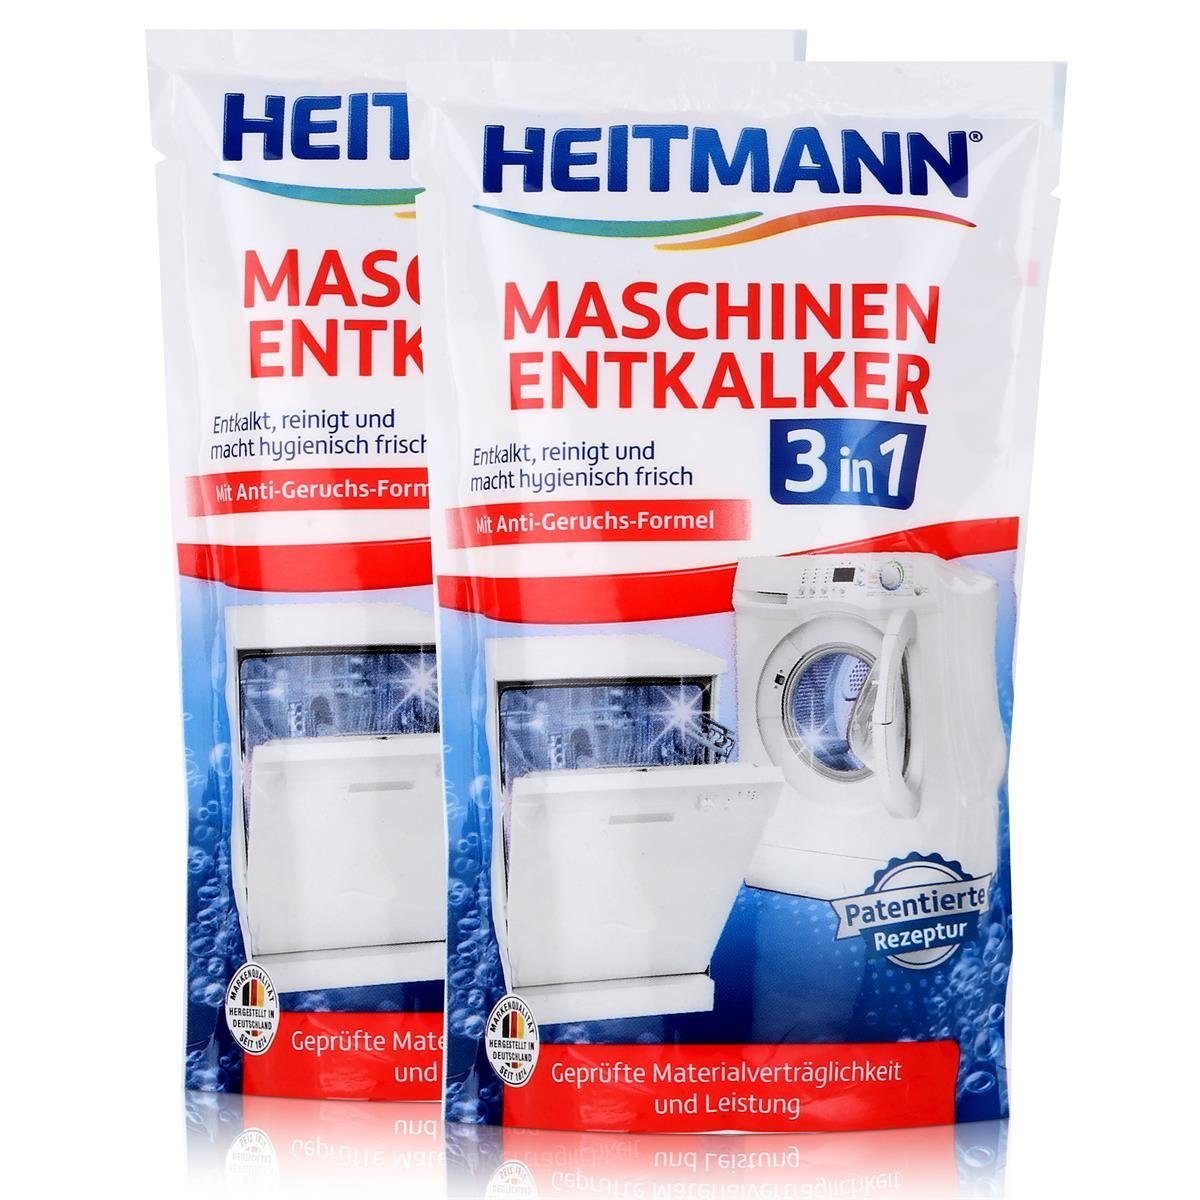 HEITMANN Geschirrspüler 175g Heitmann Maschinen Entkalker und Waschmaschinen - Spezialwaschmittel